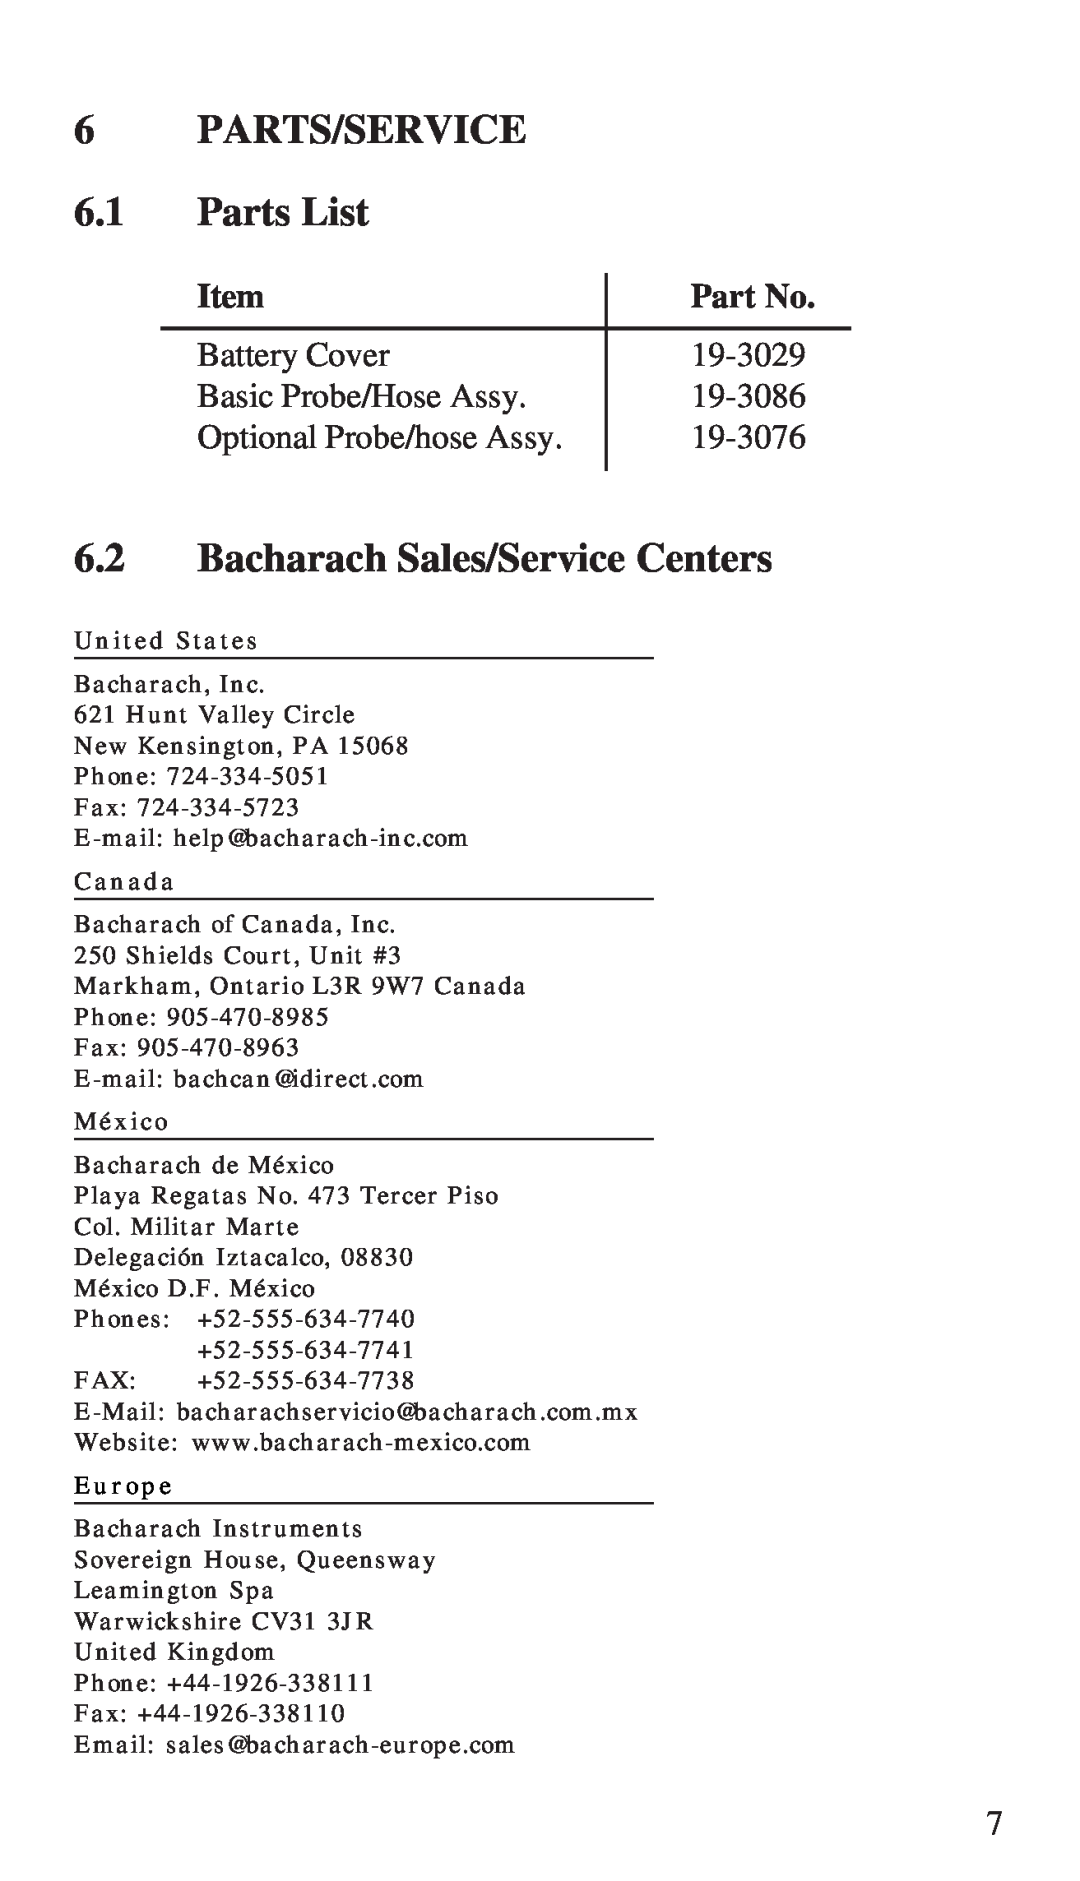 Bacharach 19-7044 manual Parts/Service, Parts List, Bacharach Sales/Service Centers, United States, Canada, México, Europe 